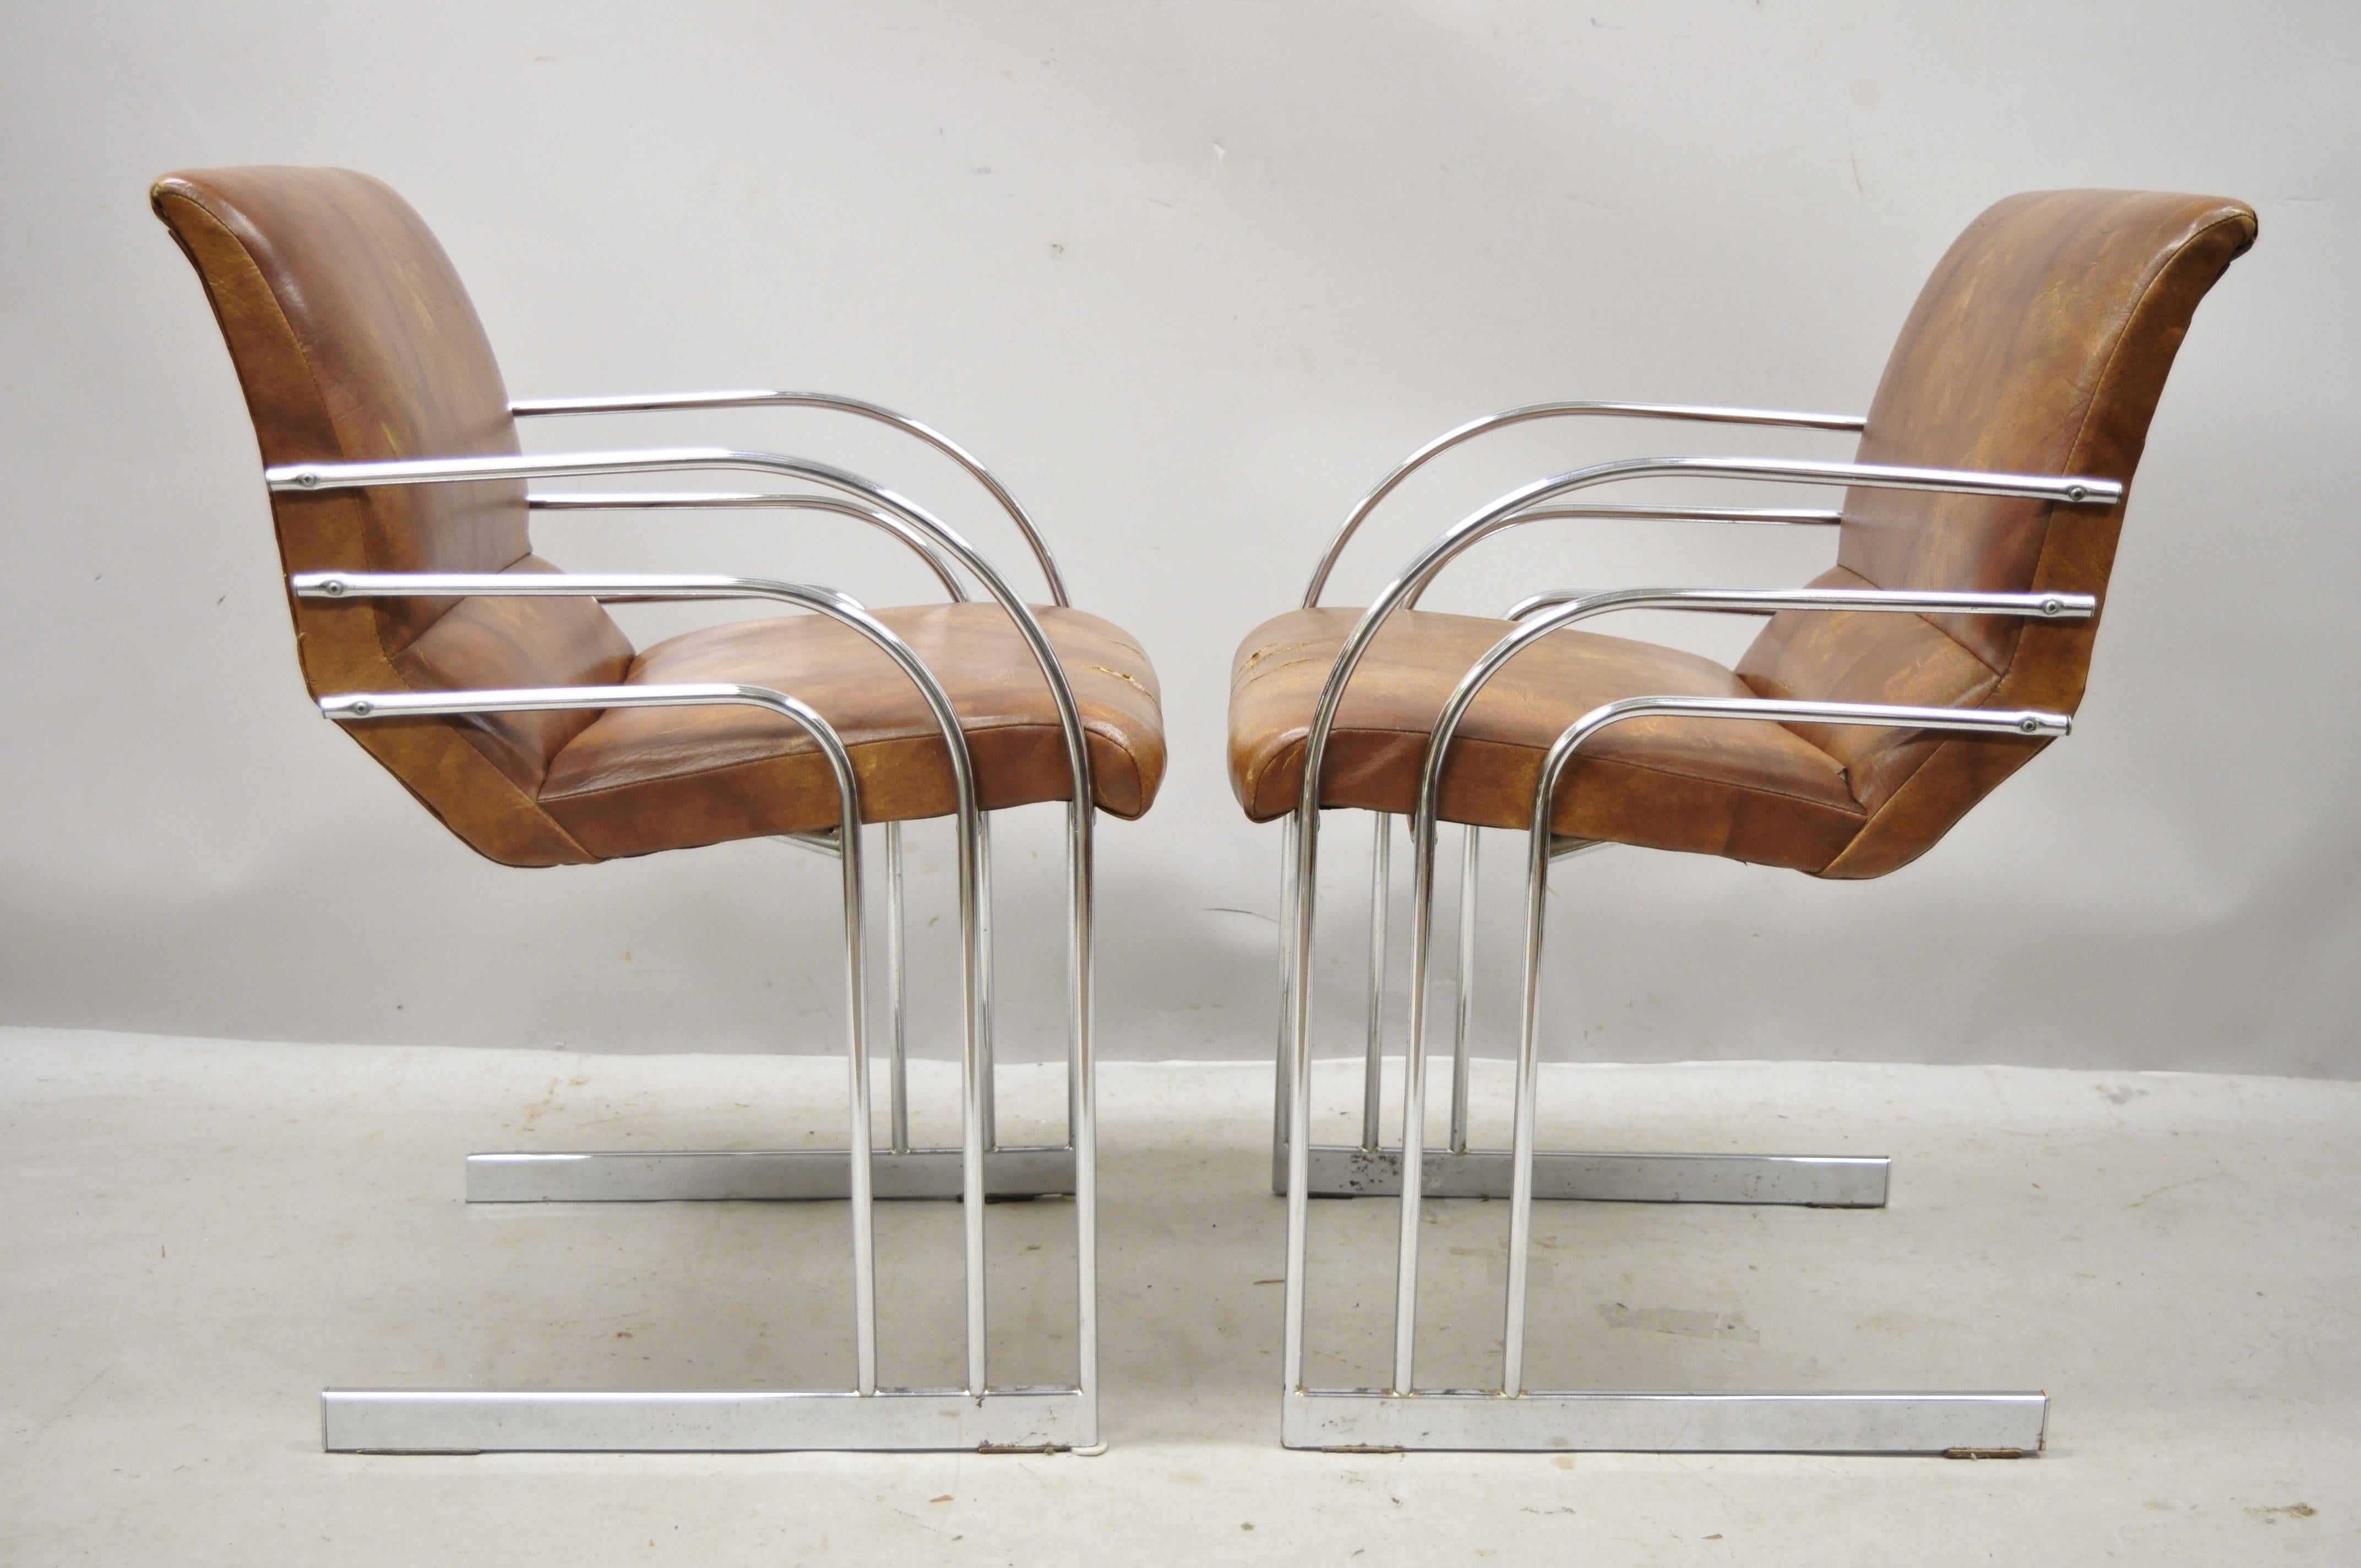 Mid-Century Modern Art Deco chrome cantilever Milo Baughman style armchairs - a Pair. Item features a chrome cantilever frame, sweeping Art Deco design, very nice vintage item, clean modernist lines, sleek sculptural form, circa mid-20th century.